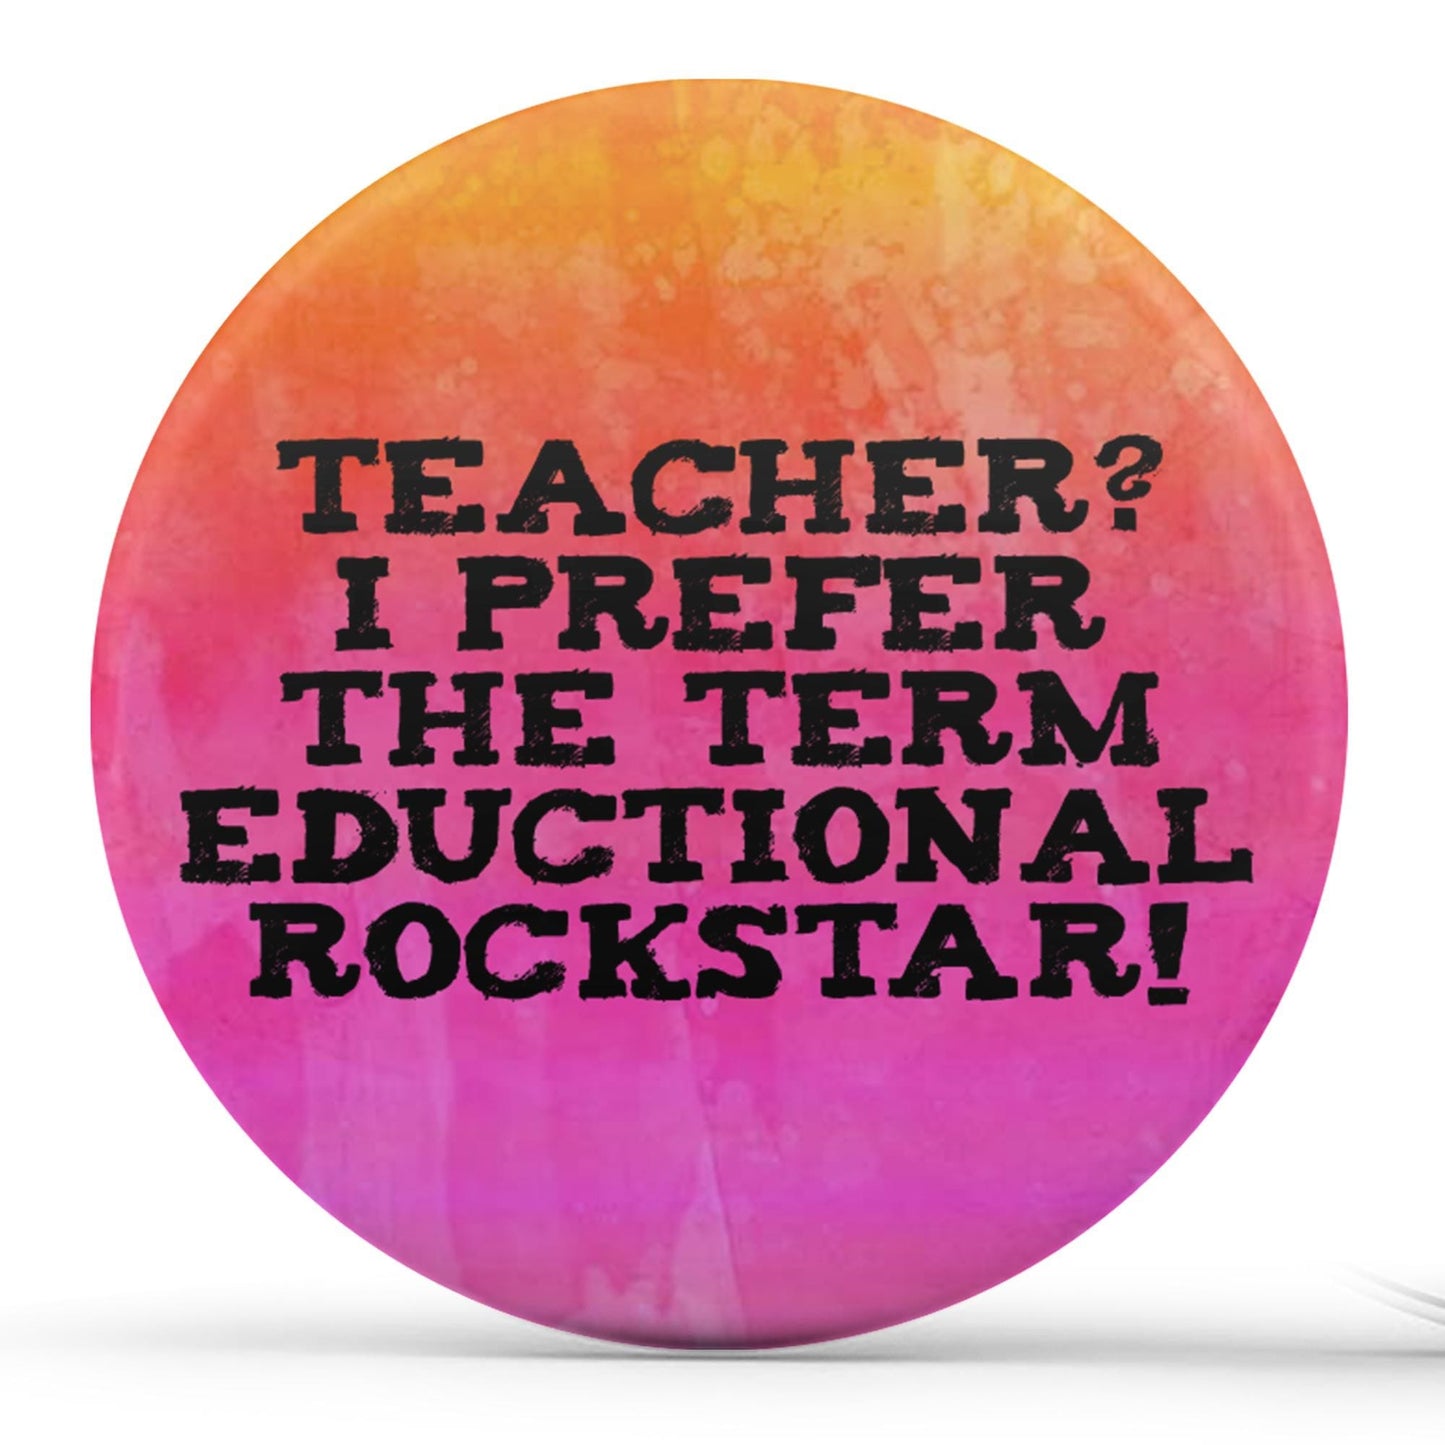 Teacher? I prefer the term educational rockstar! Image